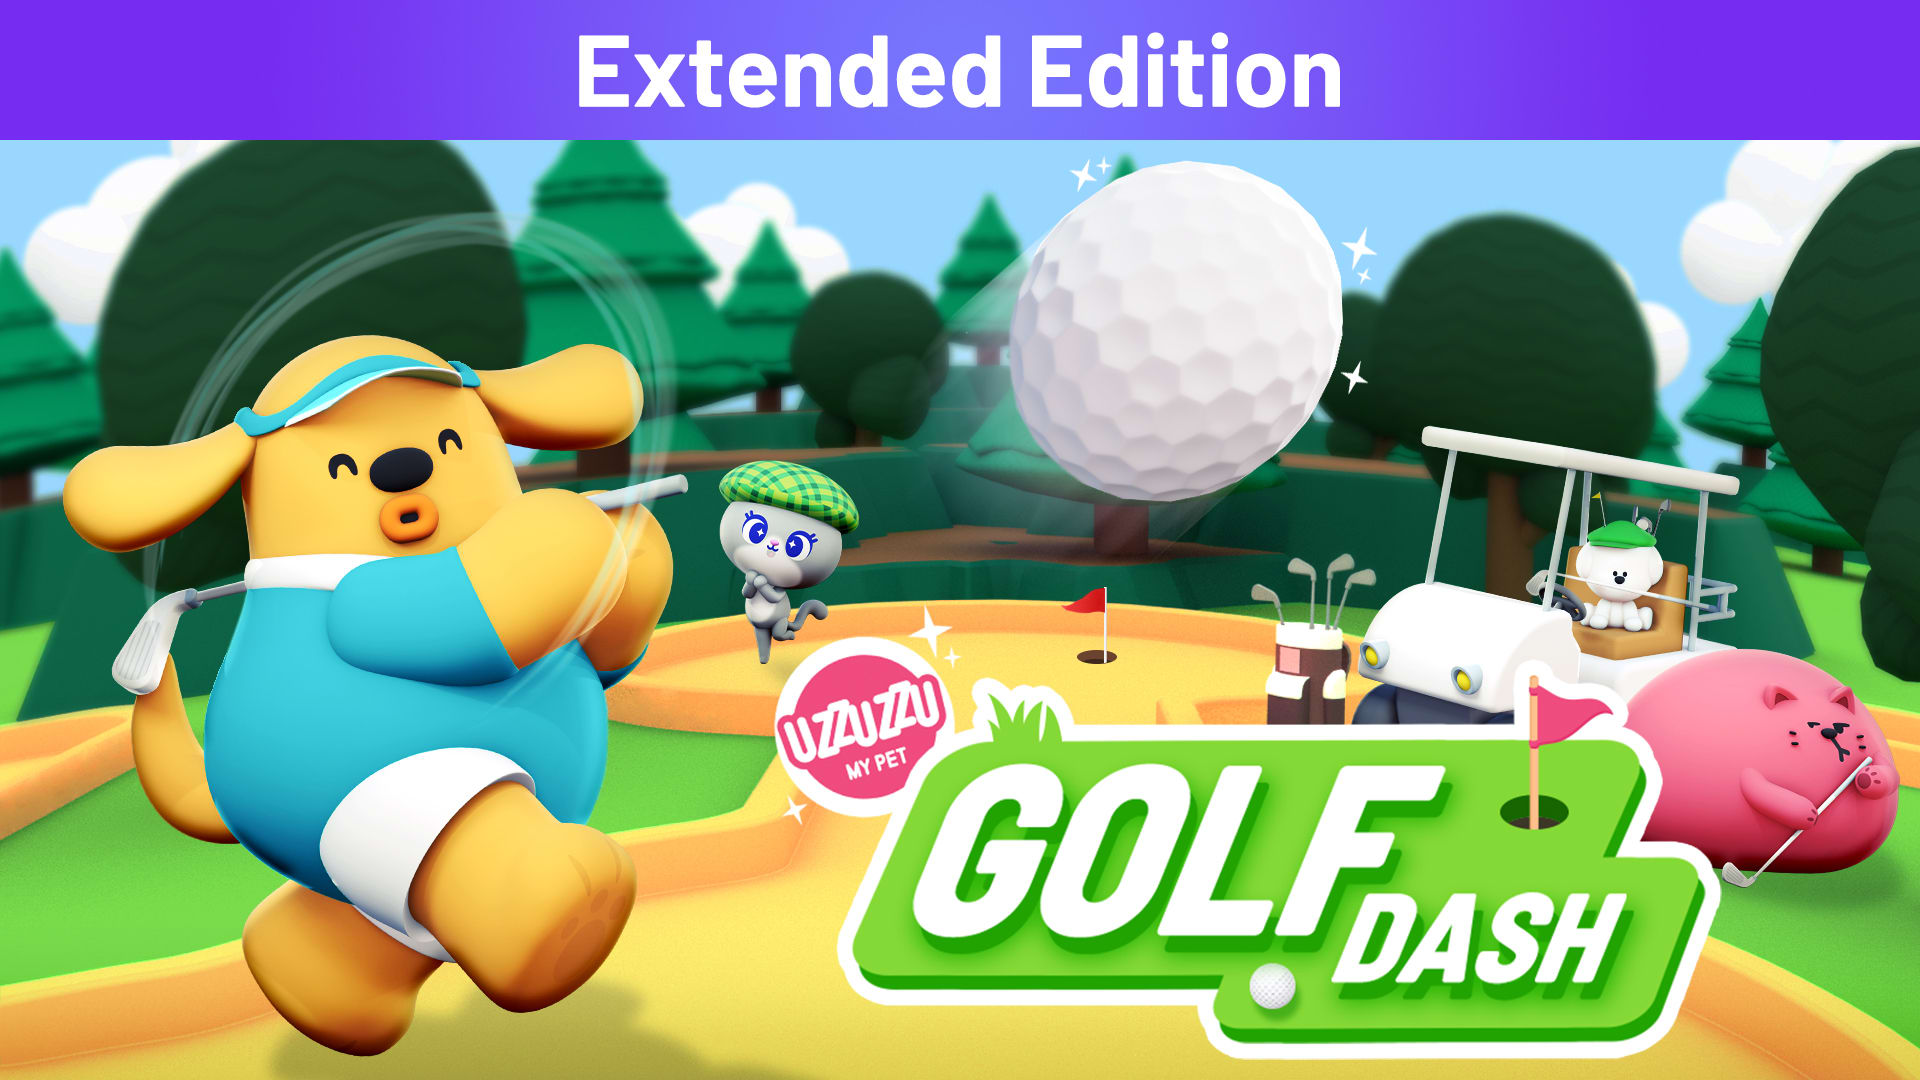 Uzzuzzu My Pet - Golf Dash Extended Edition